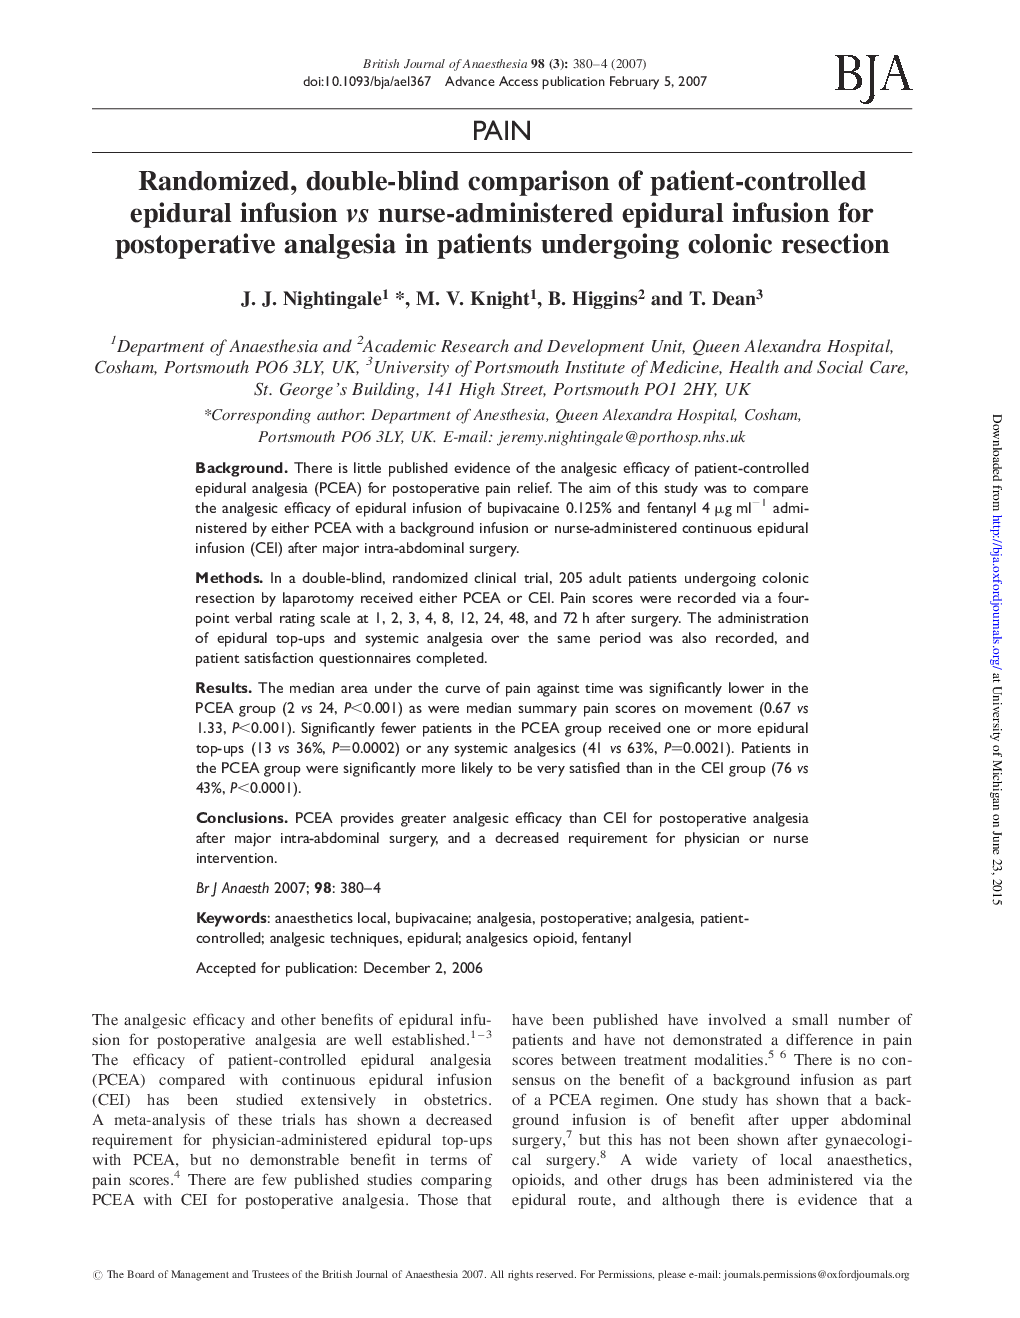 Randomized, double-blind comparison of patient-controlled epidural infusion vs nurse-administered epidural infusion for postoperative analgesia in patients undergoing colonic resection